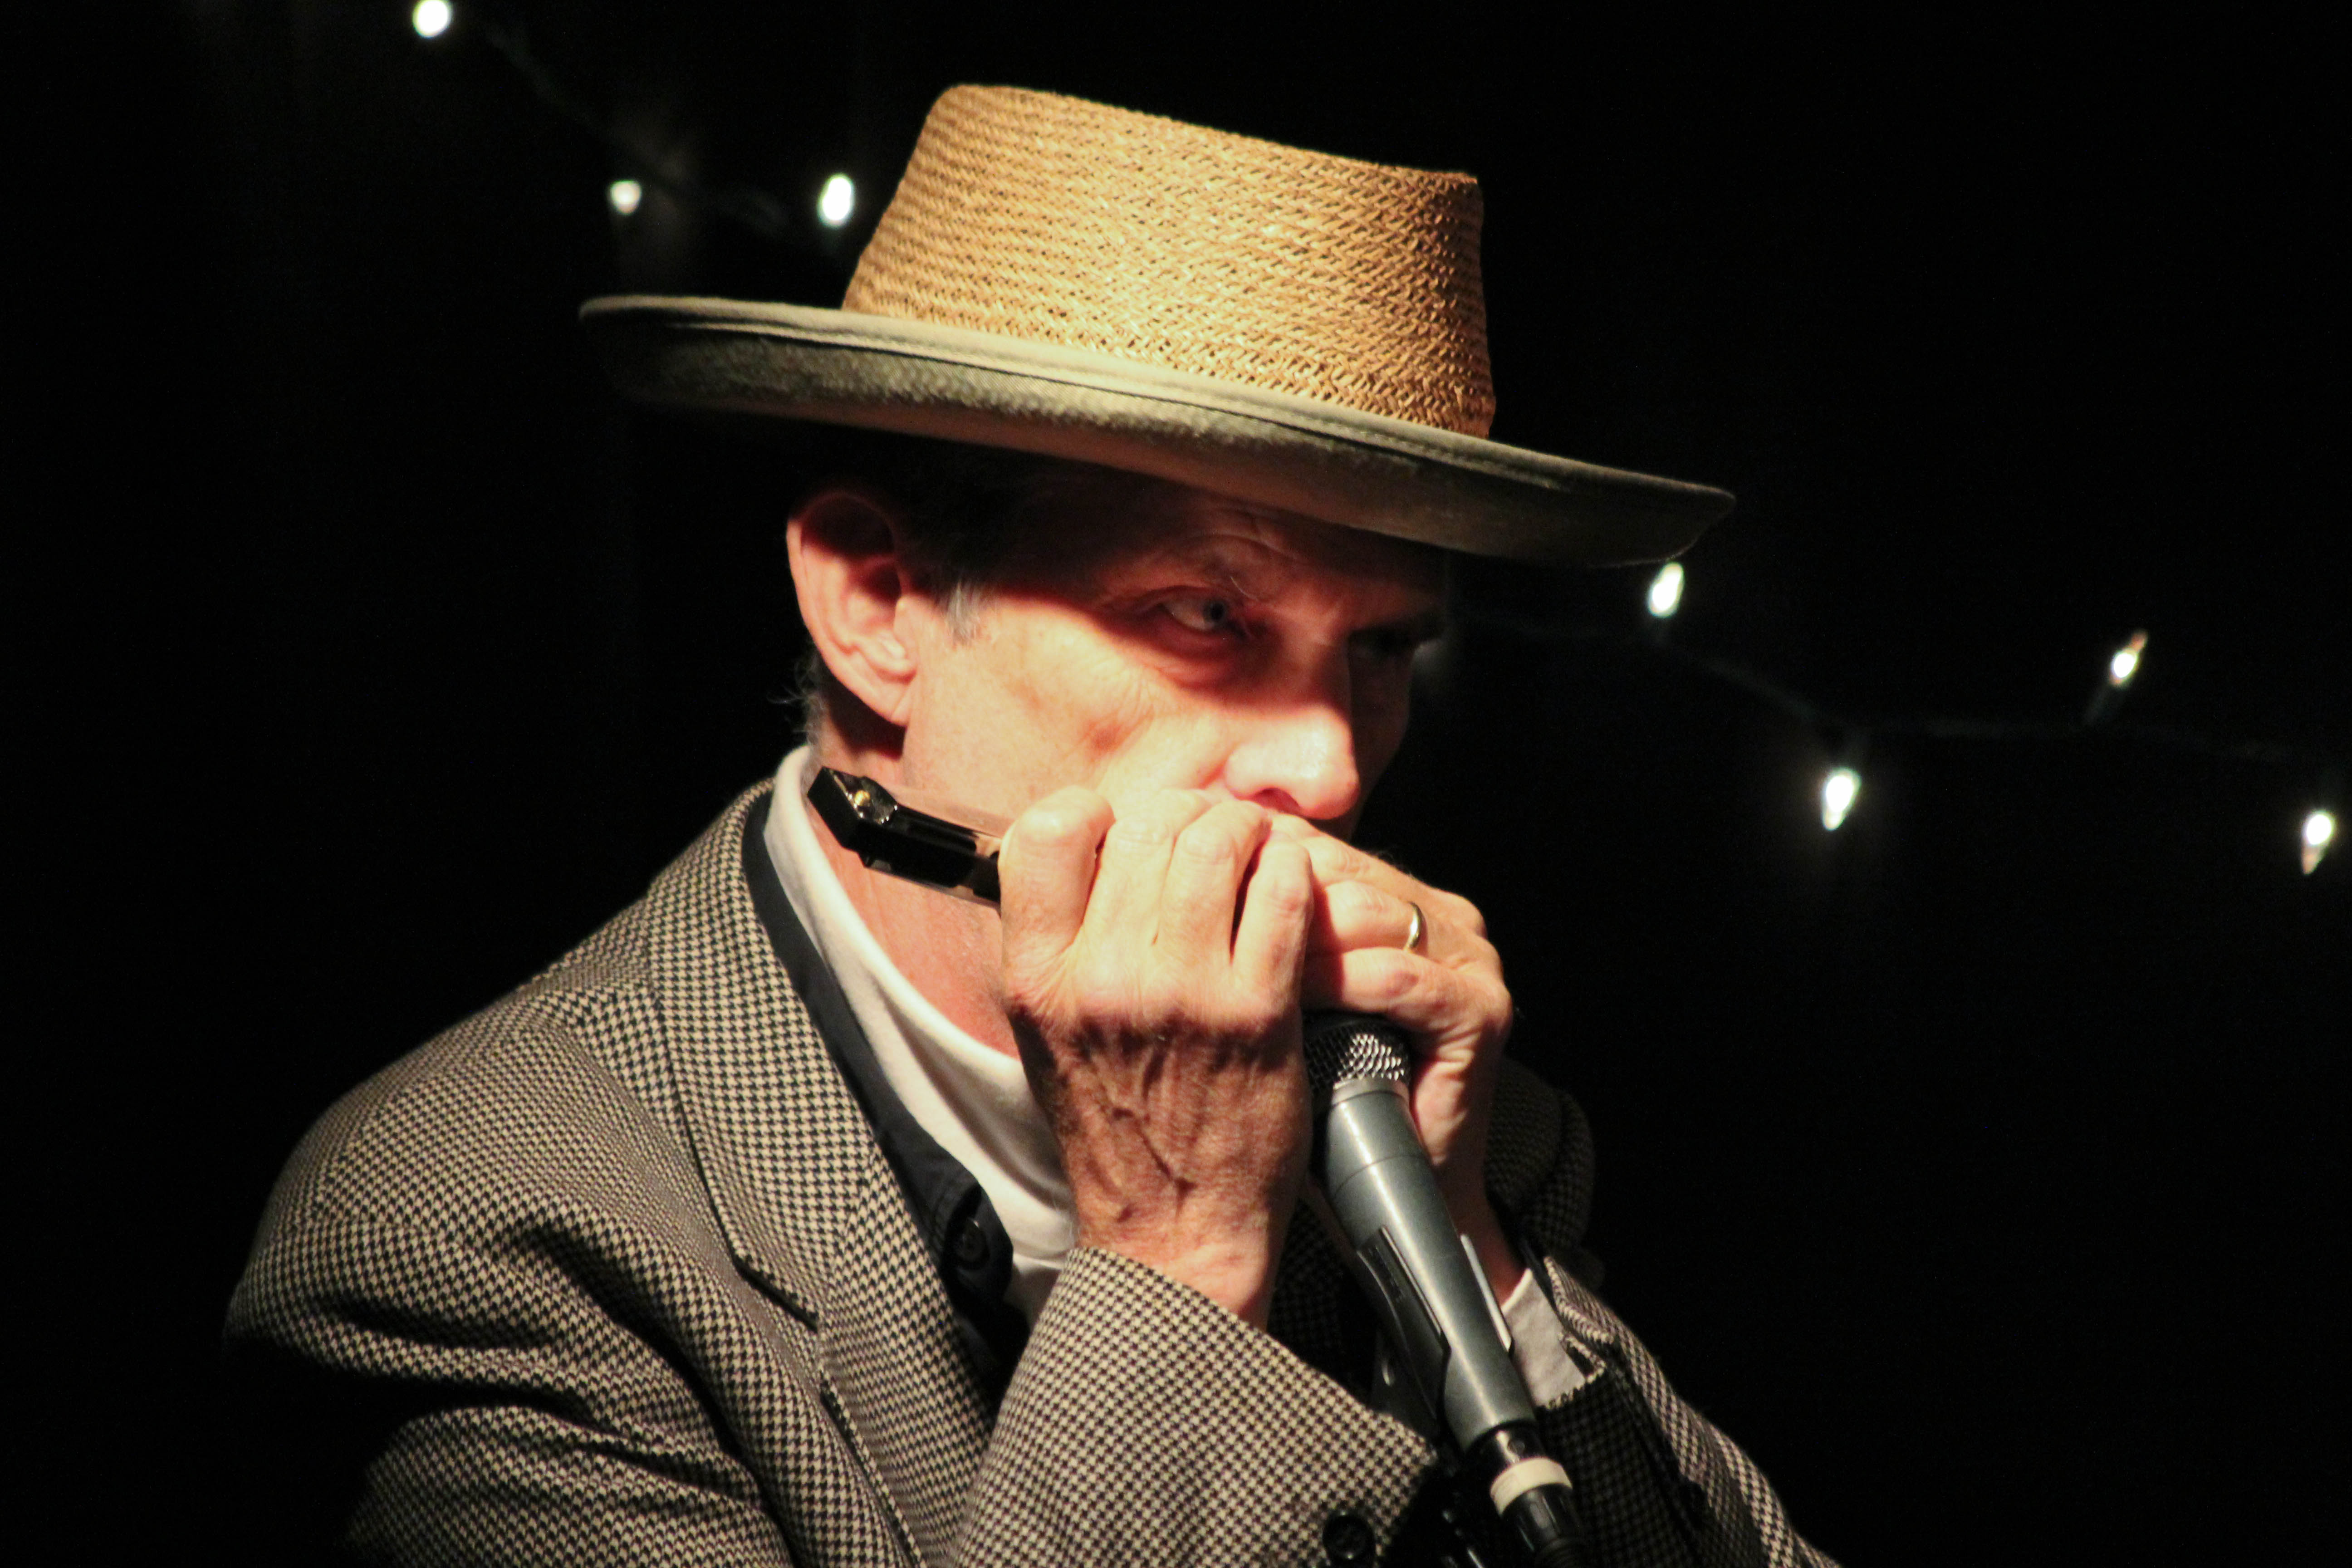 Doktor Krankheit with the Americana Ensemble at Club Passim 7 January 2012